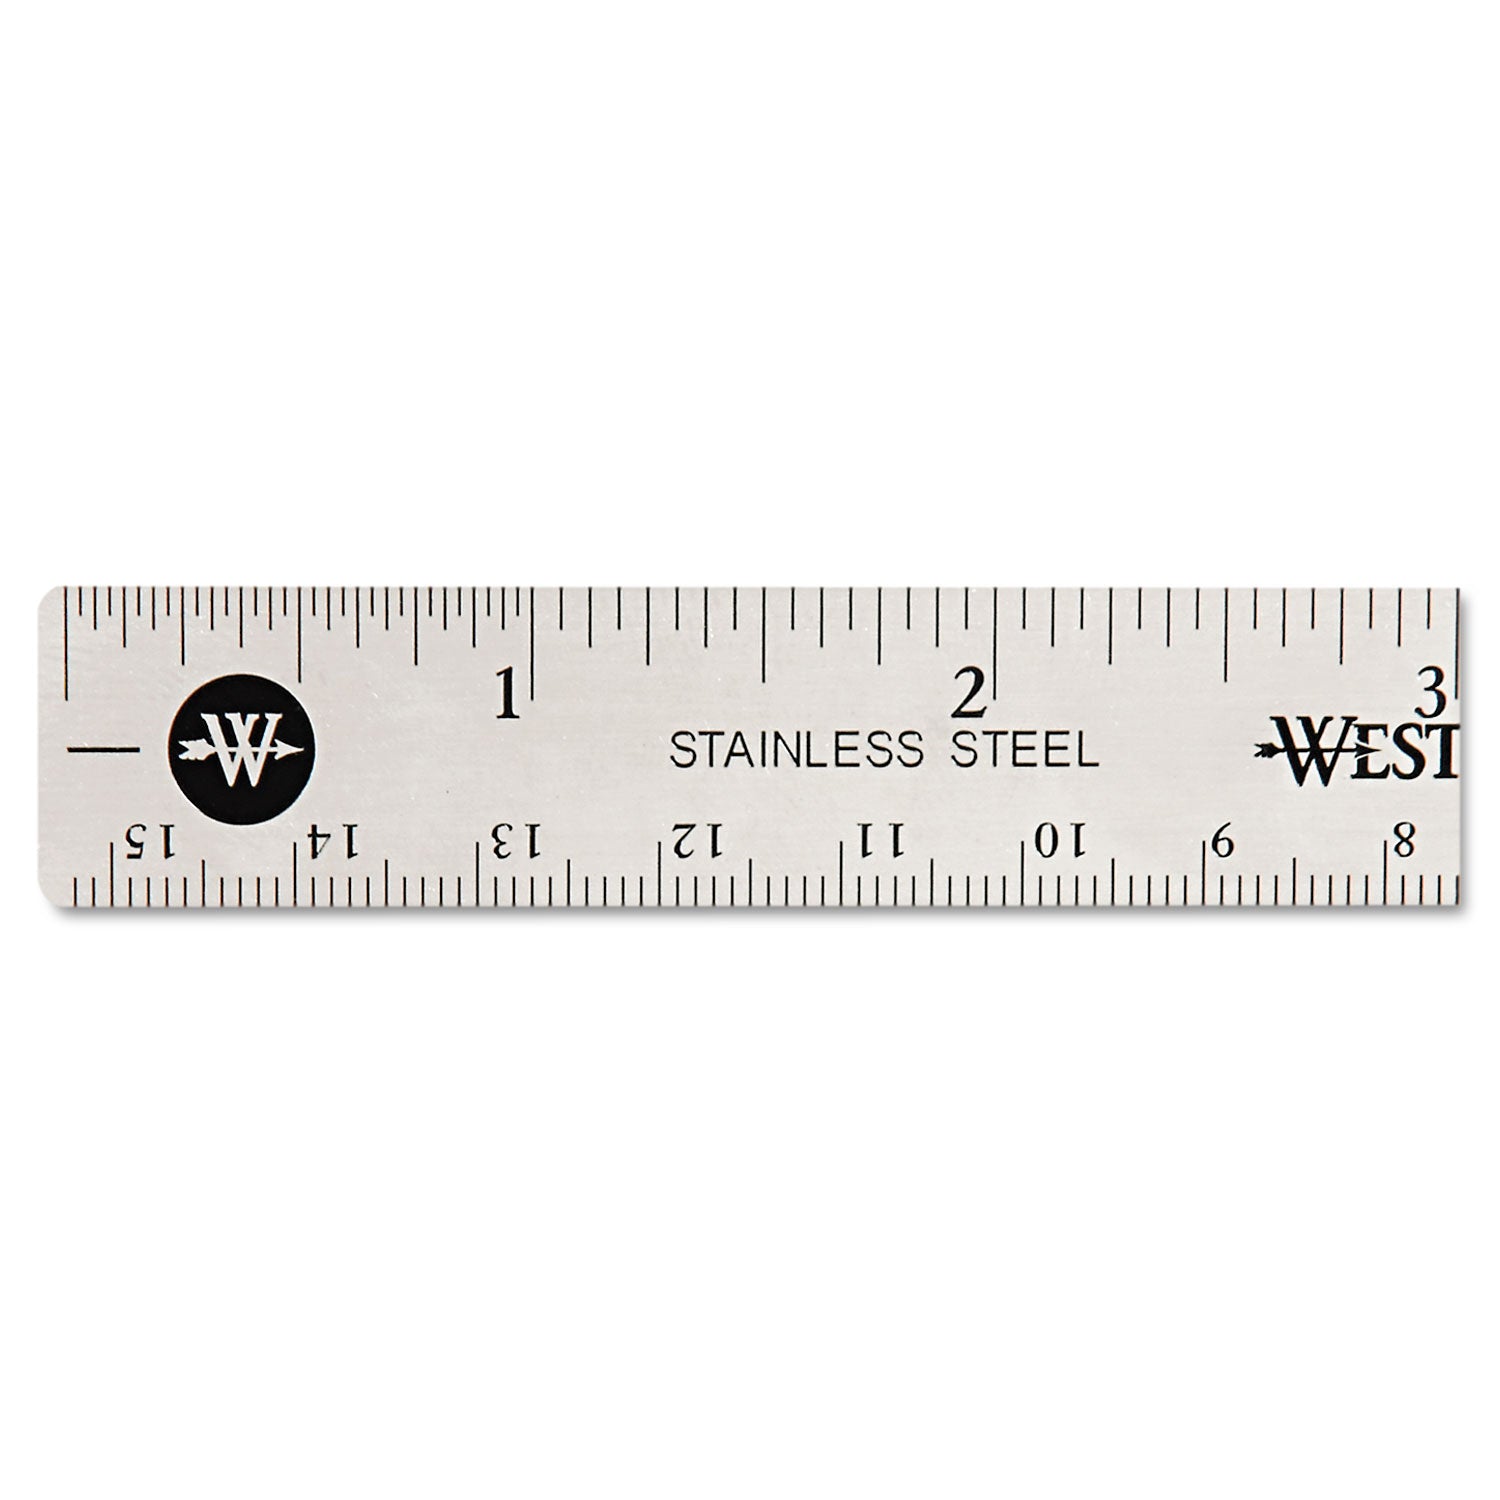 Stainless Steel Office Ruler With Non Slip Cork Base, Standard/Metric, 6" Long - 